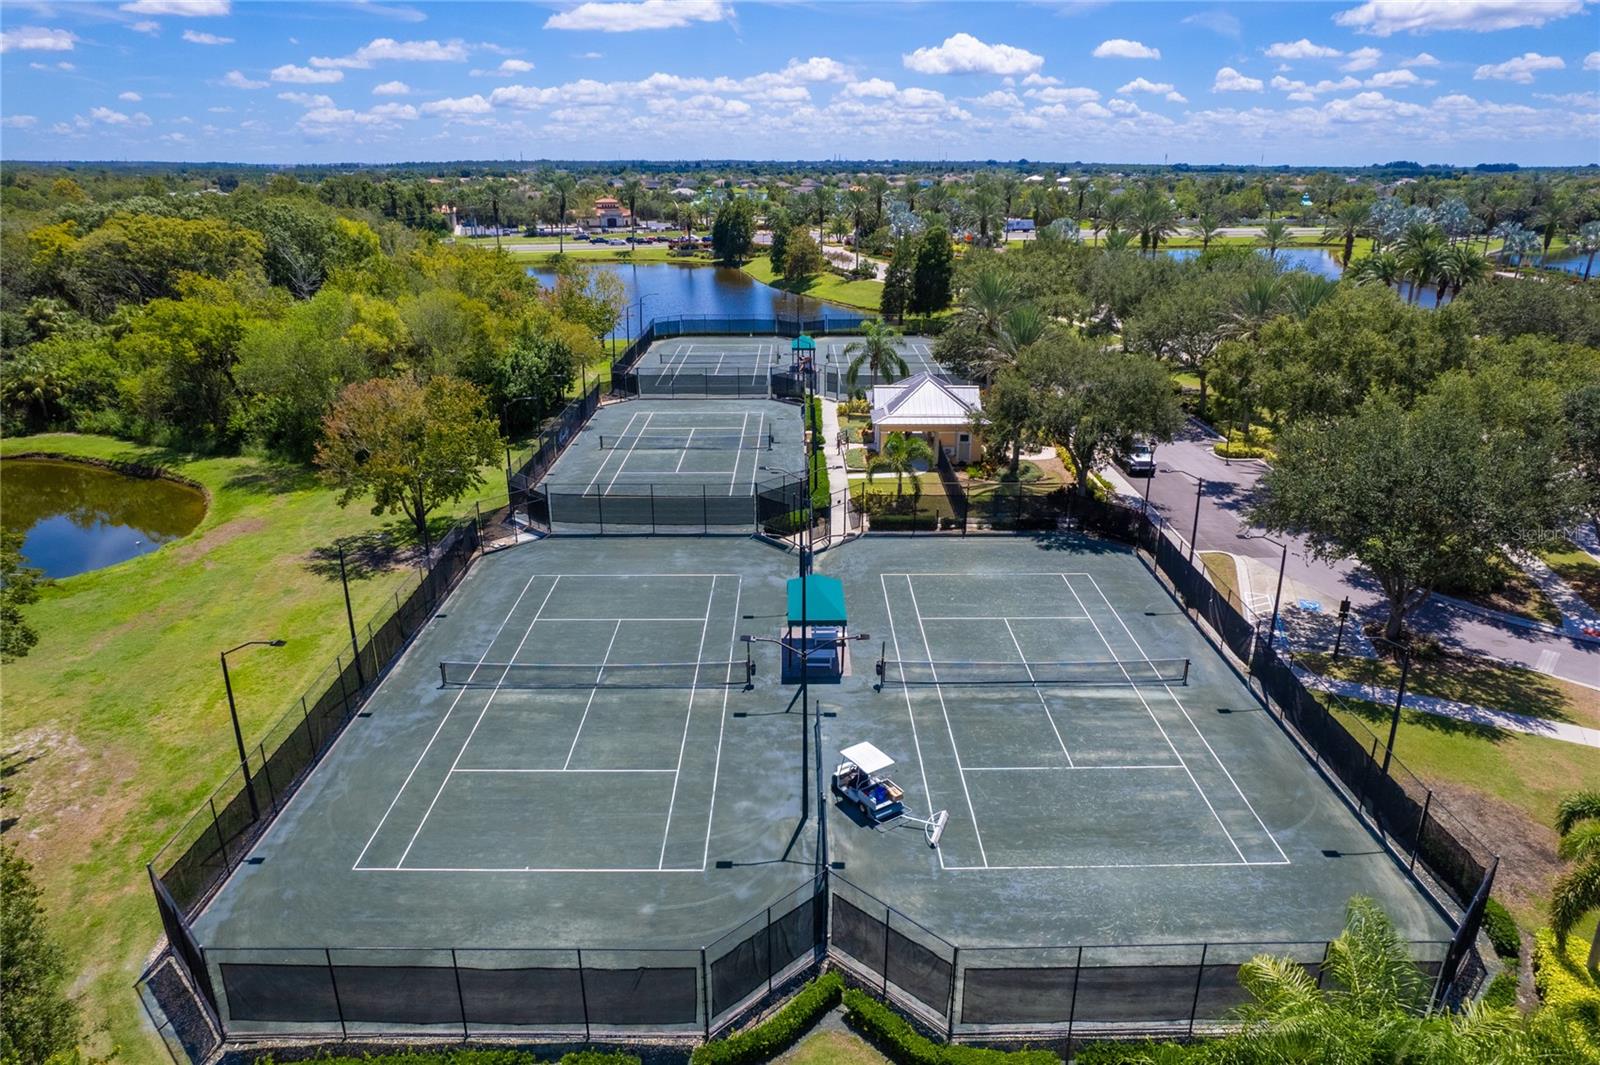 Five Community Tennis Courts.